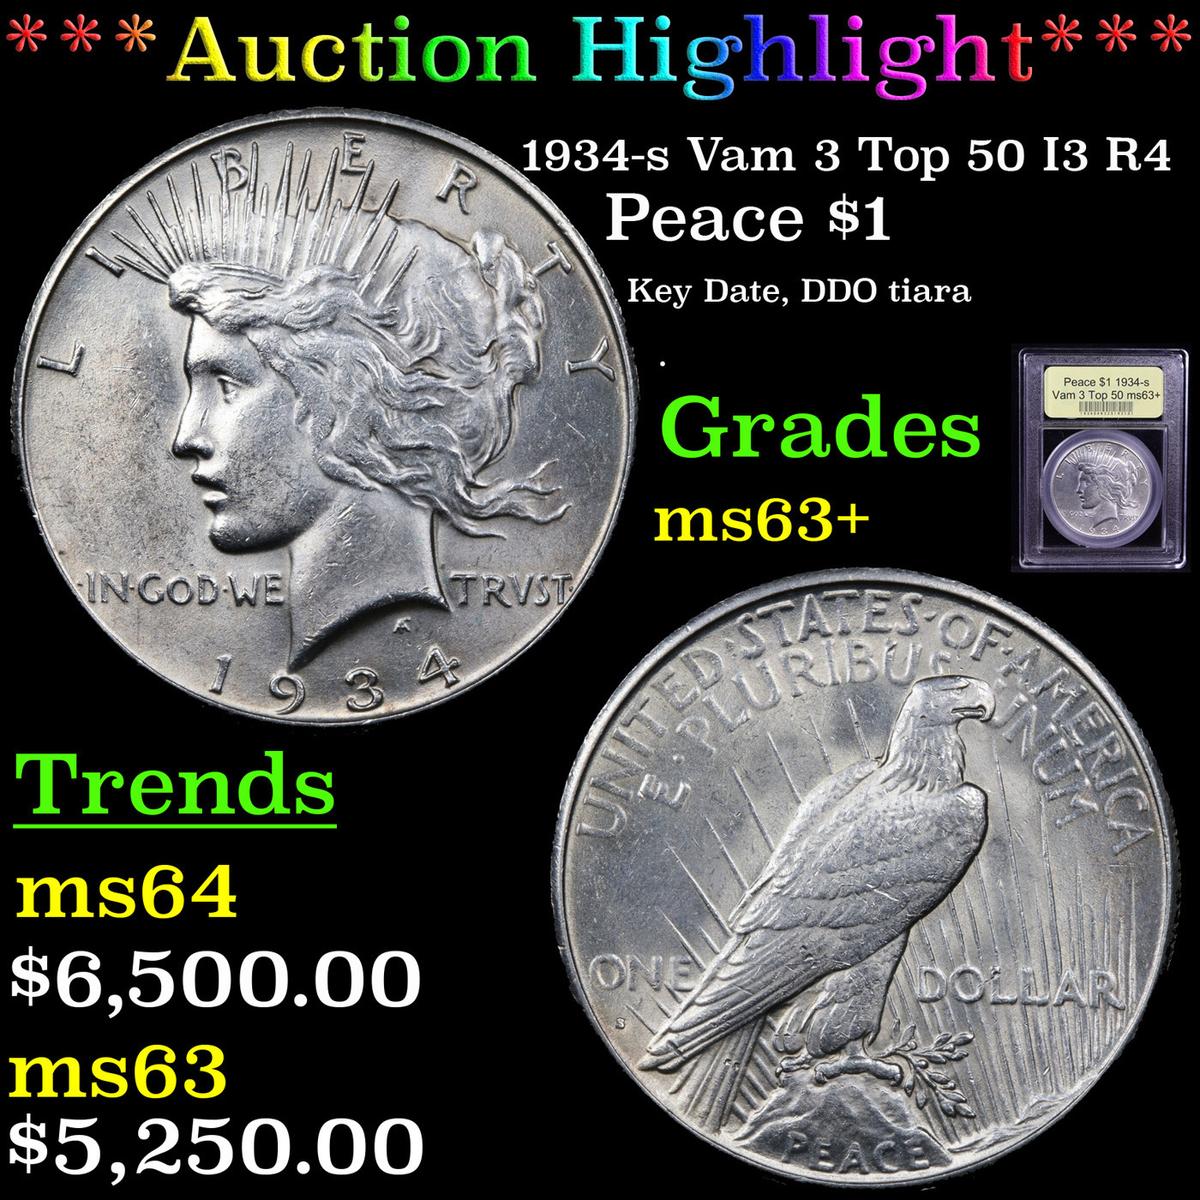 ***Auction Highlight*** 1934-s Vam 3 Top 50 I3 R4 Peace Dollar $1 Graded Select+ Unc By USCG (fc)